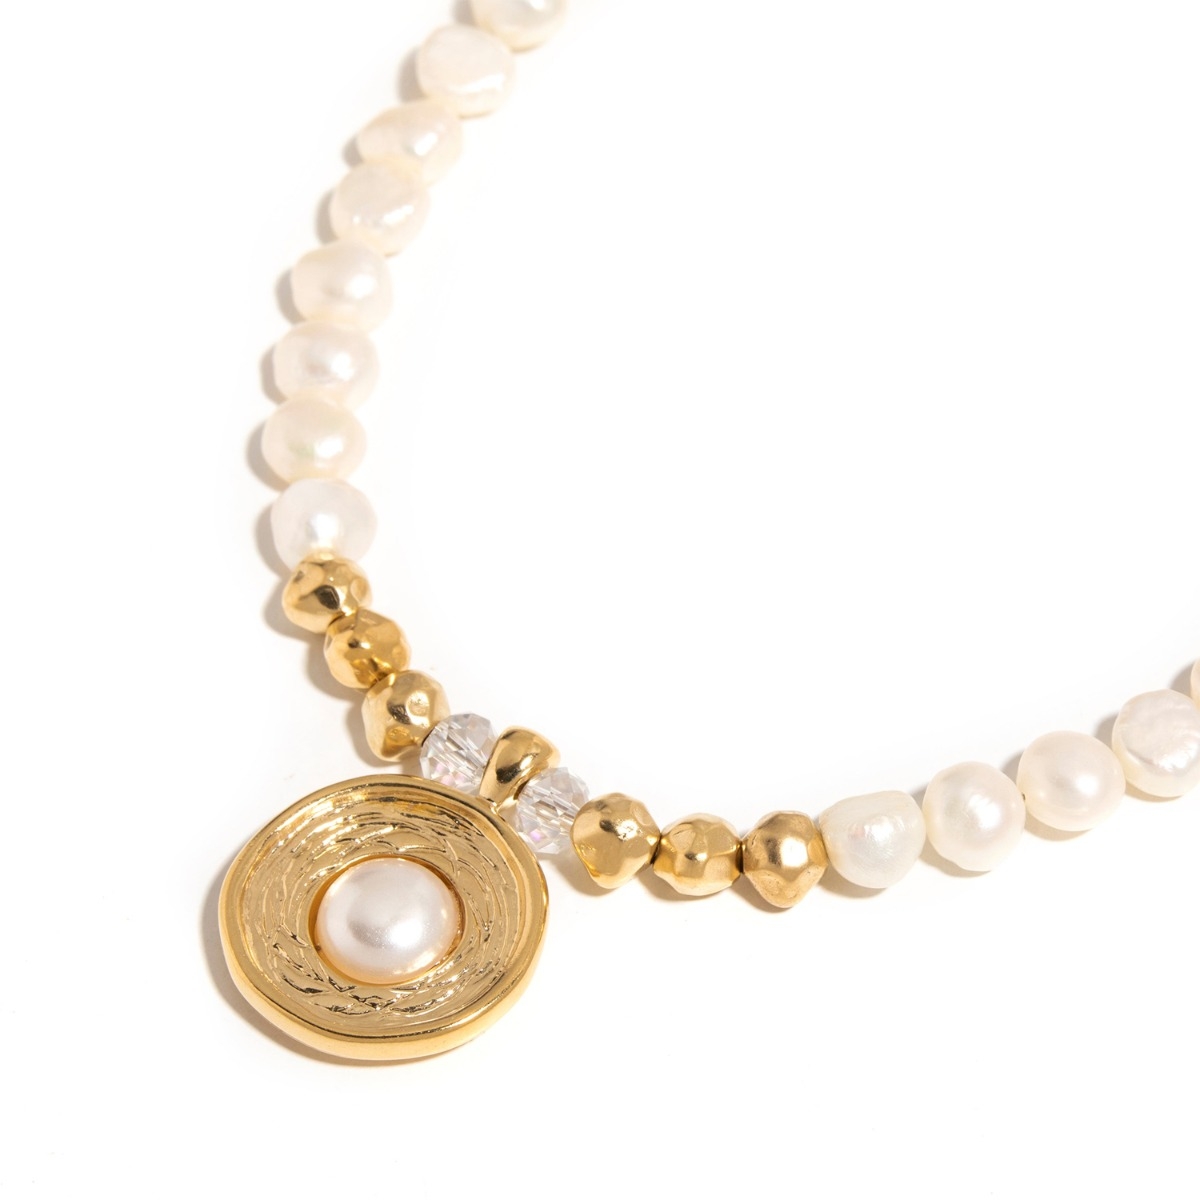 Danon Jewelry "Ilania" Necklace - 1